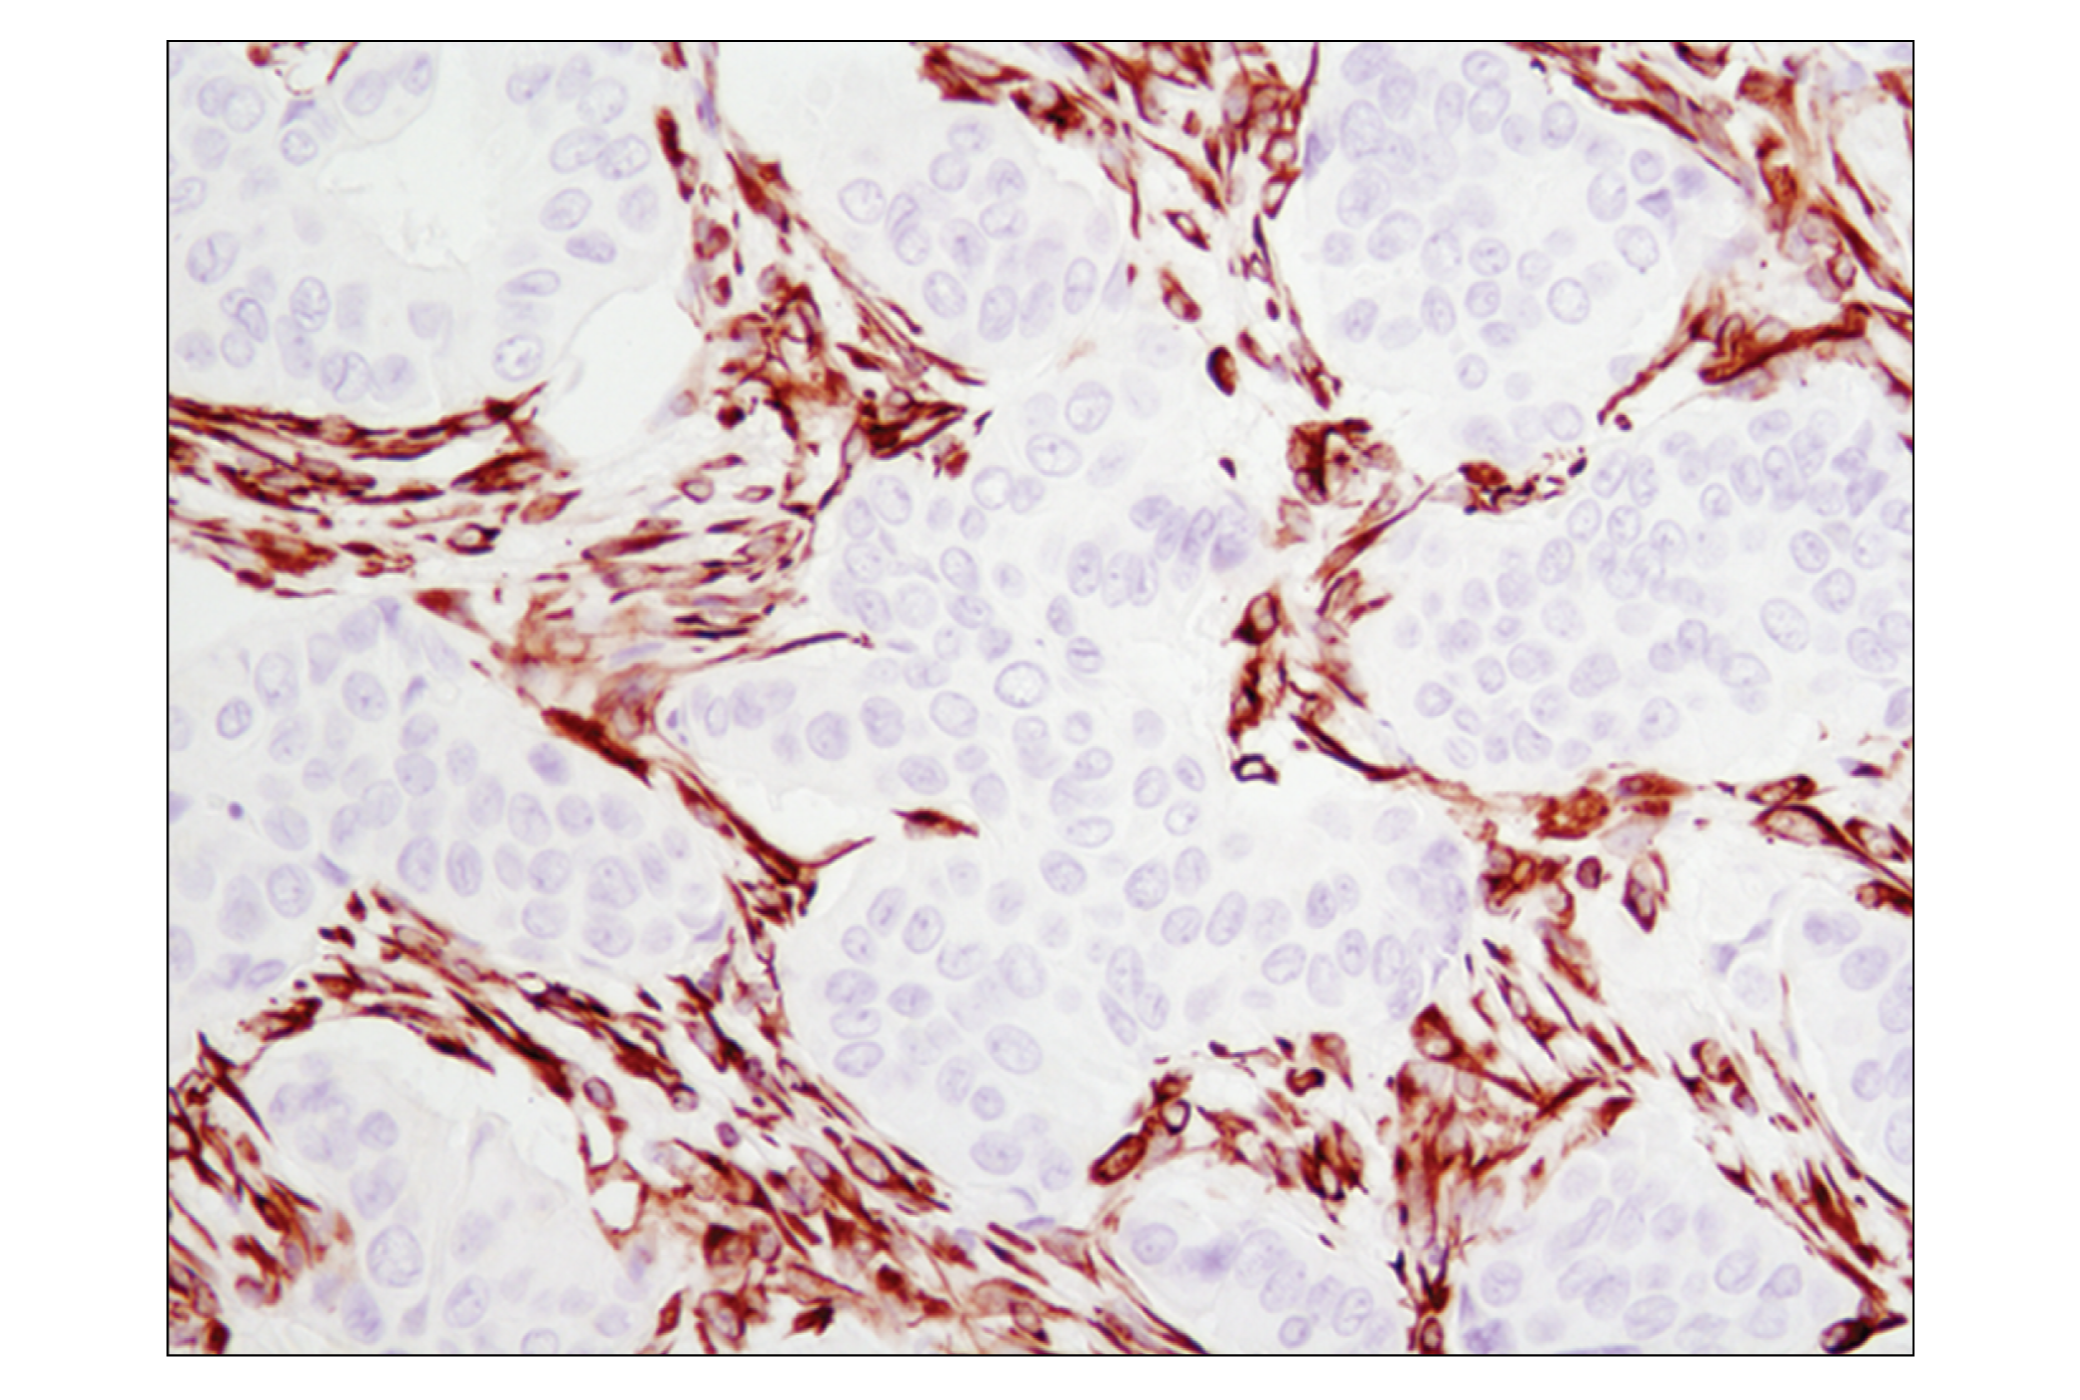  Image 39: Cancer Associated Fibroblast Marker Antibody Sampler Kit